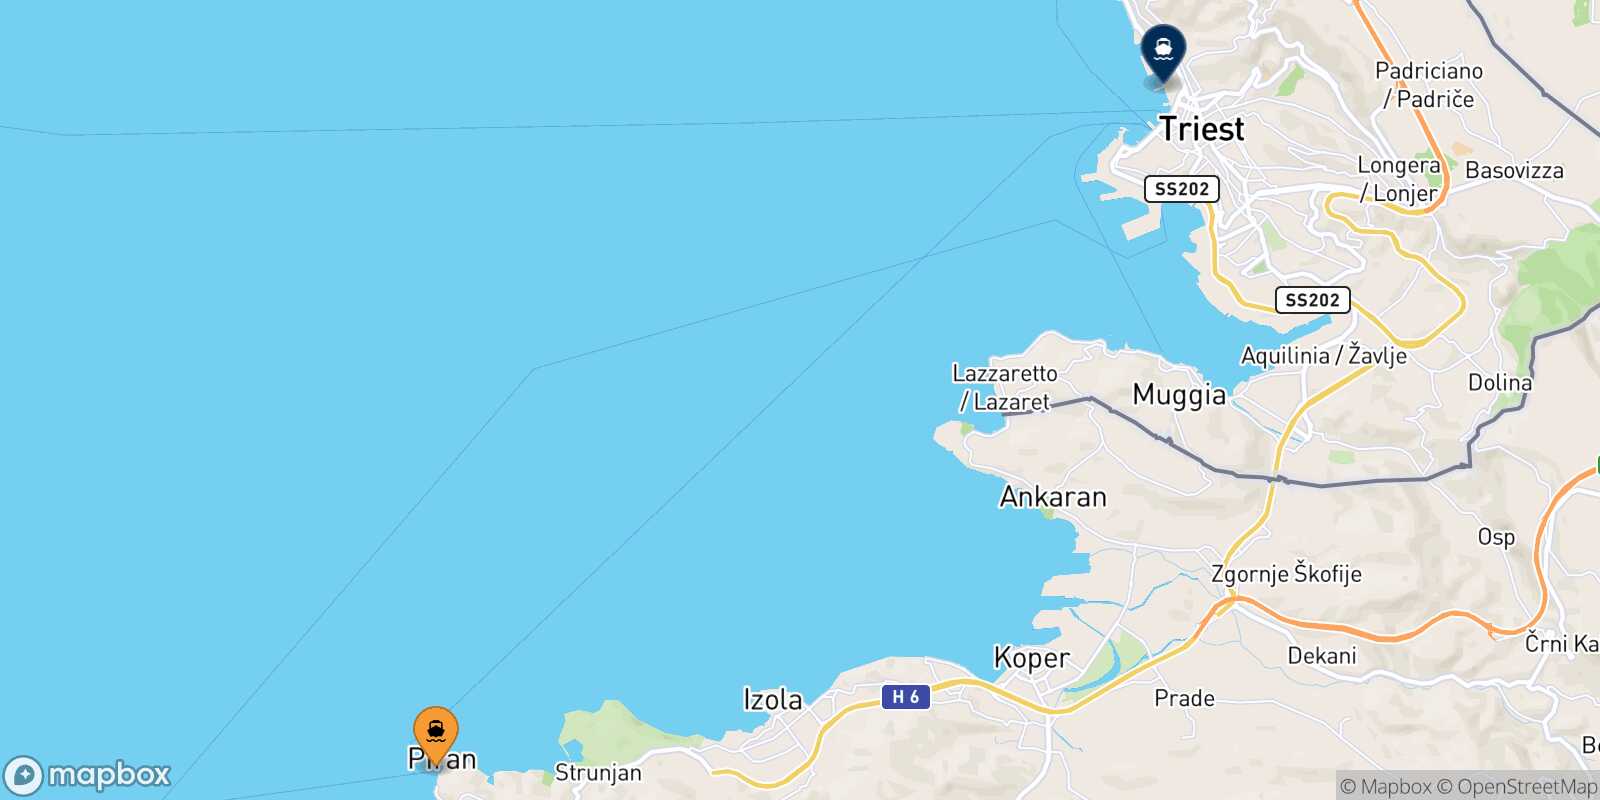 Piran Trieste route map